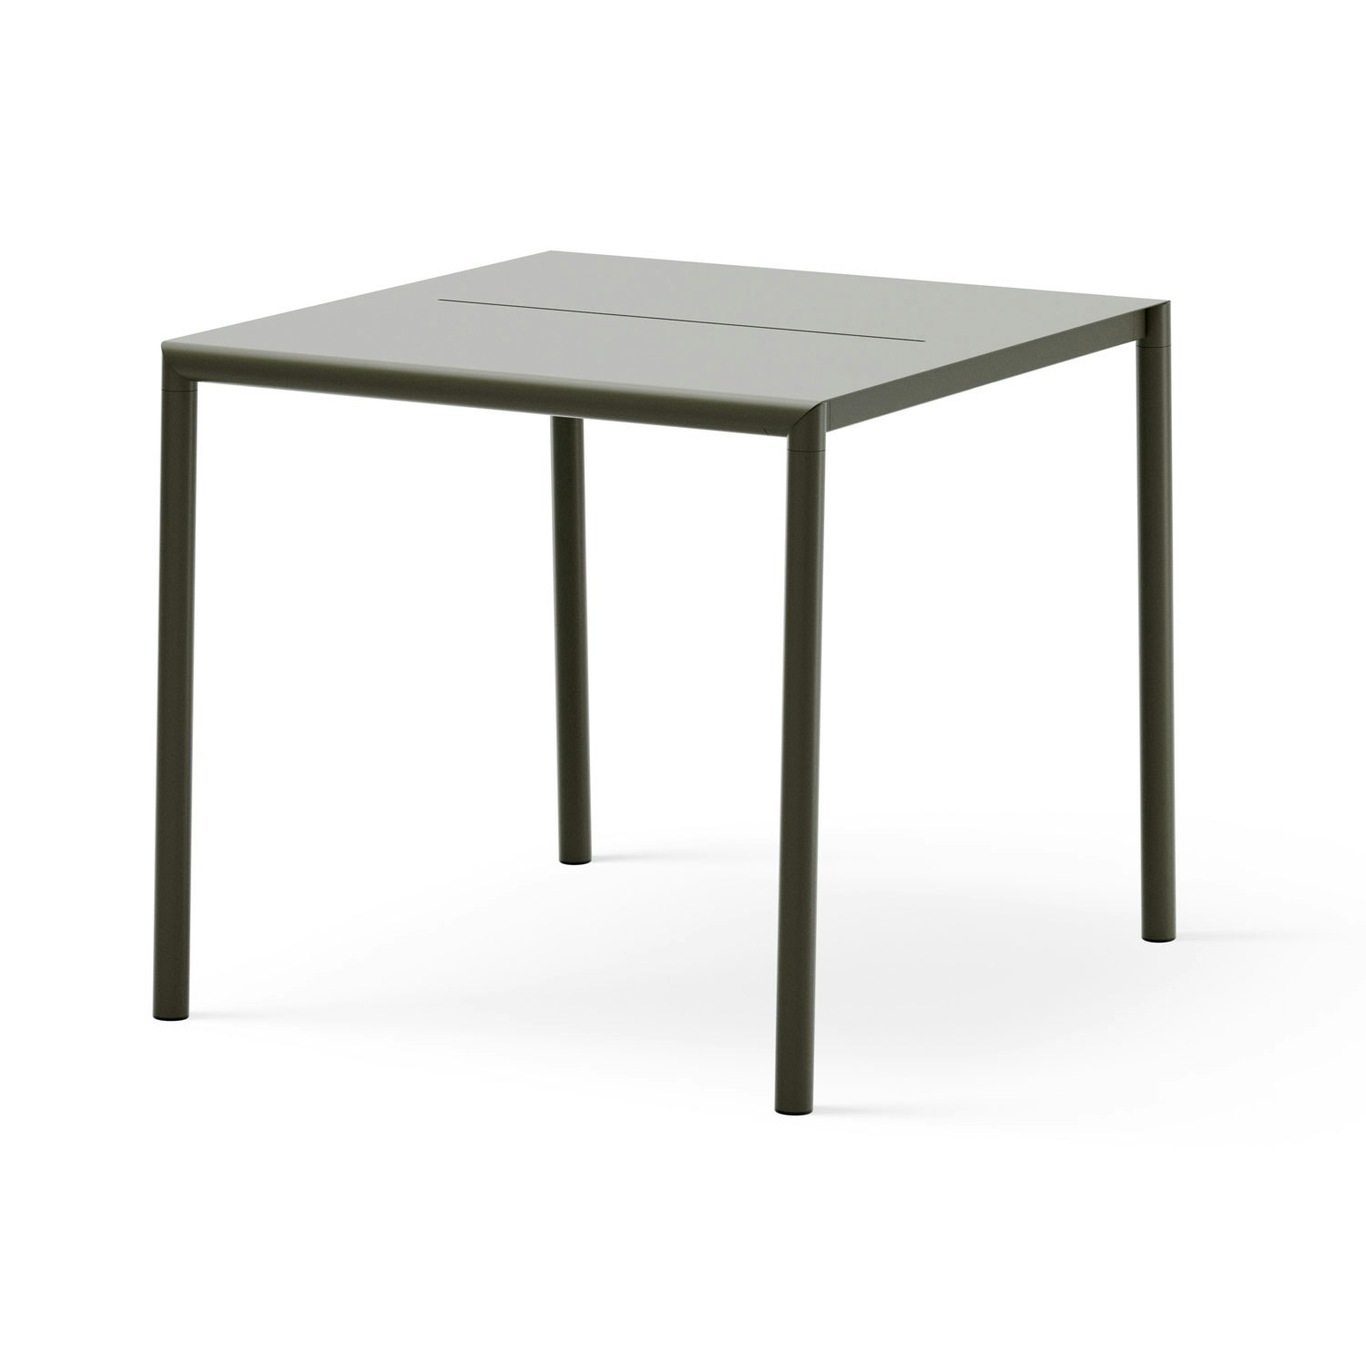 May Table 85x85, Outdoor, Steel, Dark Green